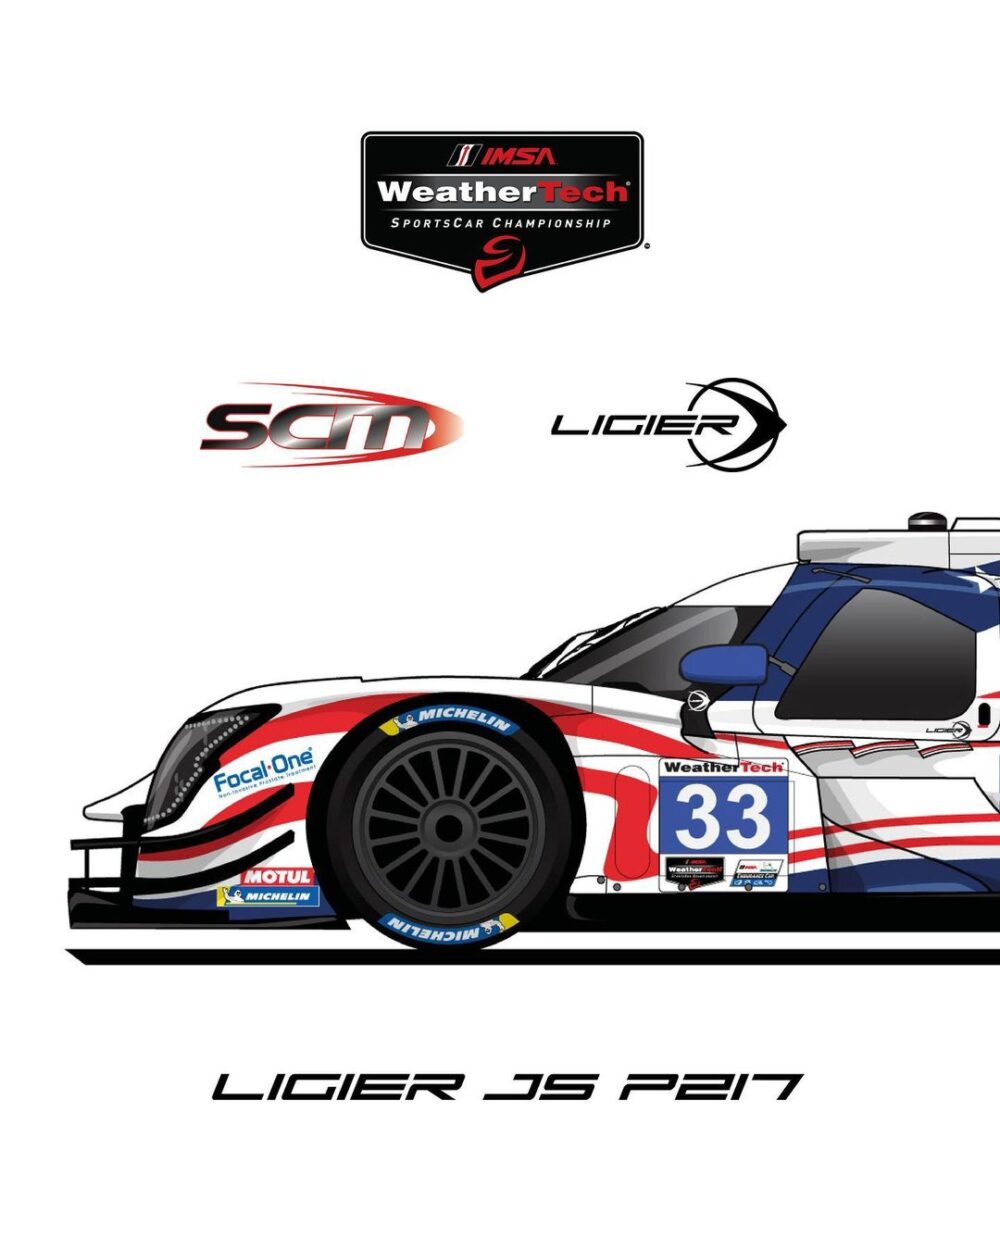 Sean Creech Motorsport competirá na classe LMP2 da IMSA com um Ligier JS P217